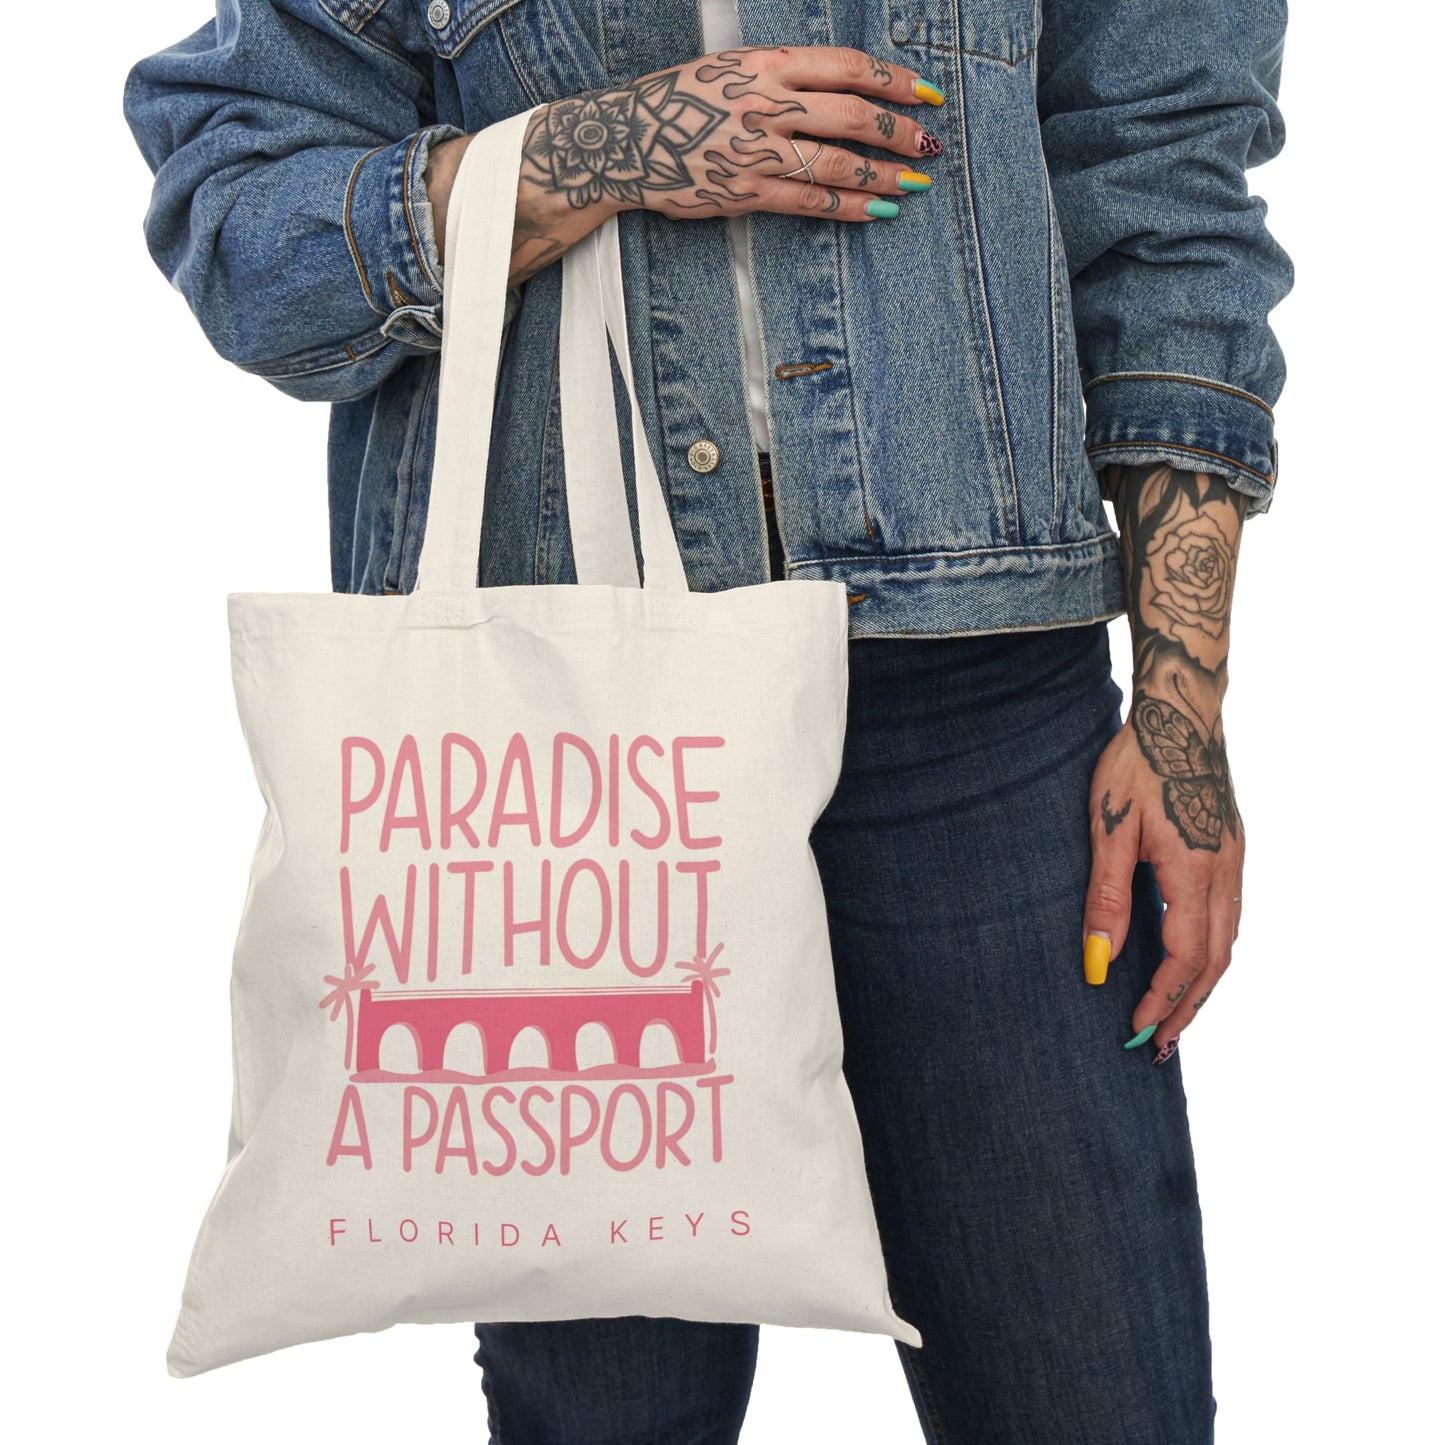 Paradise without a passport - Florida keys - Natural Tote Bag - pink